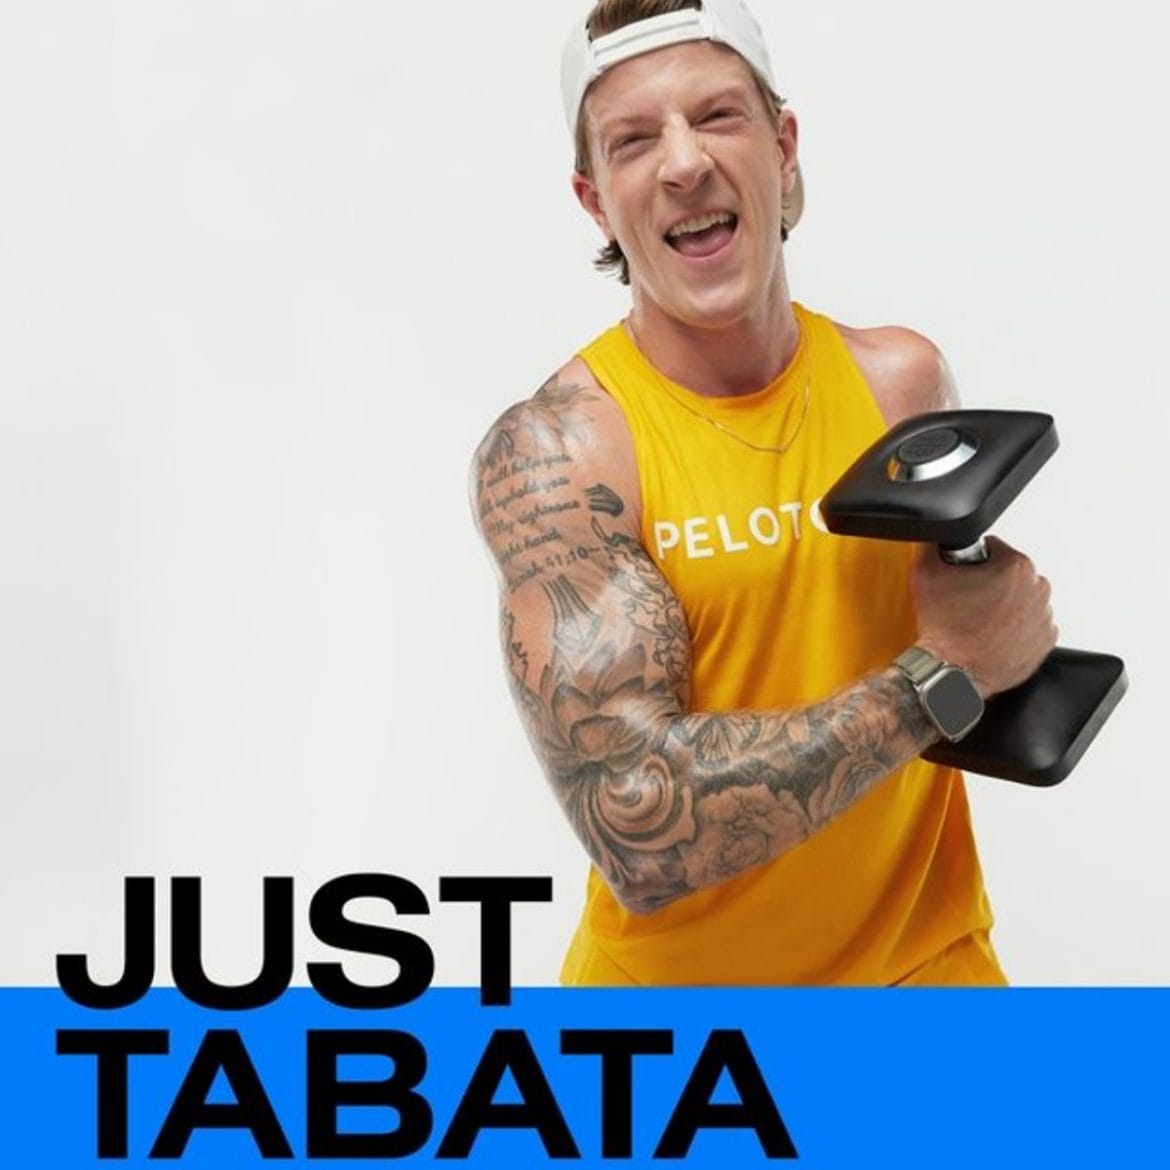 Peloton post announcing the "Just Tabata" classes with Logan Aldridge.